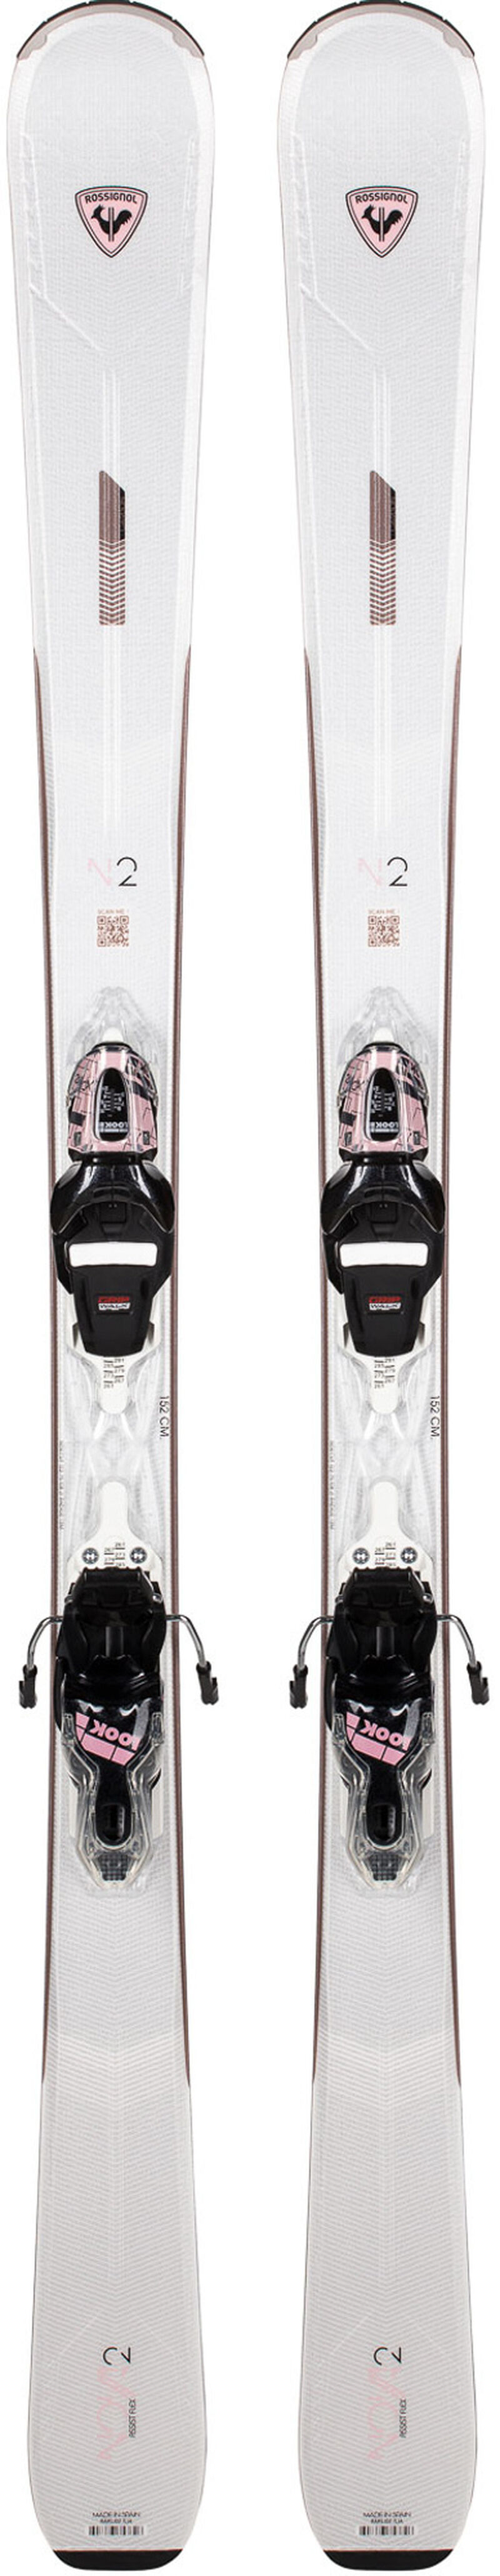 Skis de piste femme NOVA 2 (XPRESS)